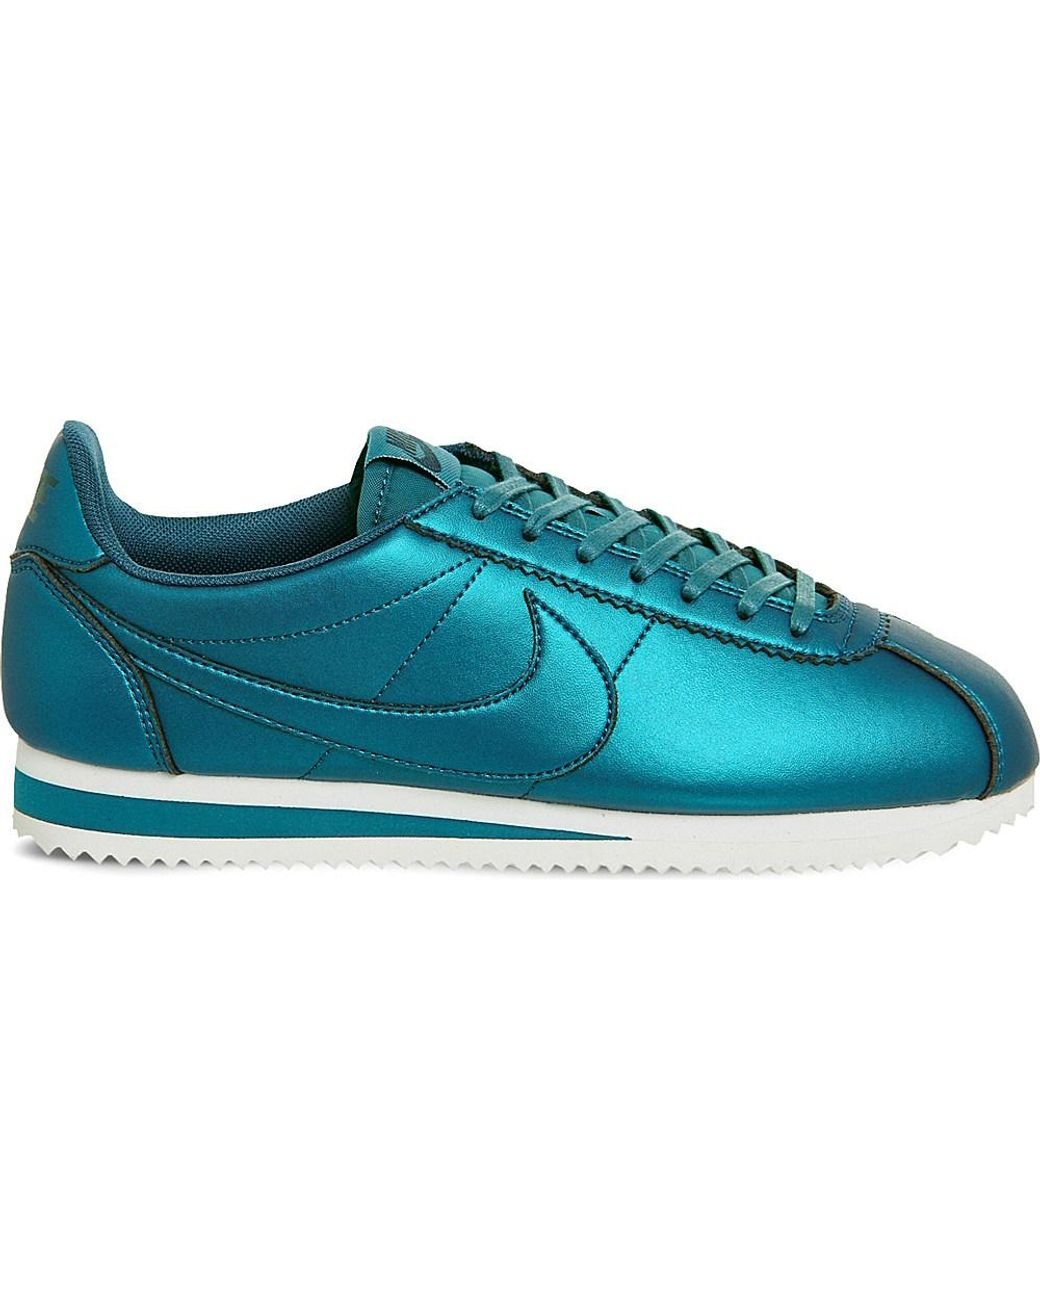 Nike Classic Cortez Og Metallic Trainers in Metallic Turquoise (Blue) | Lyst